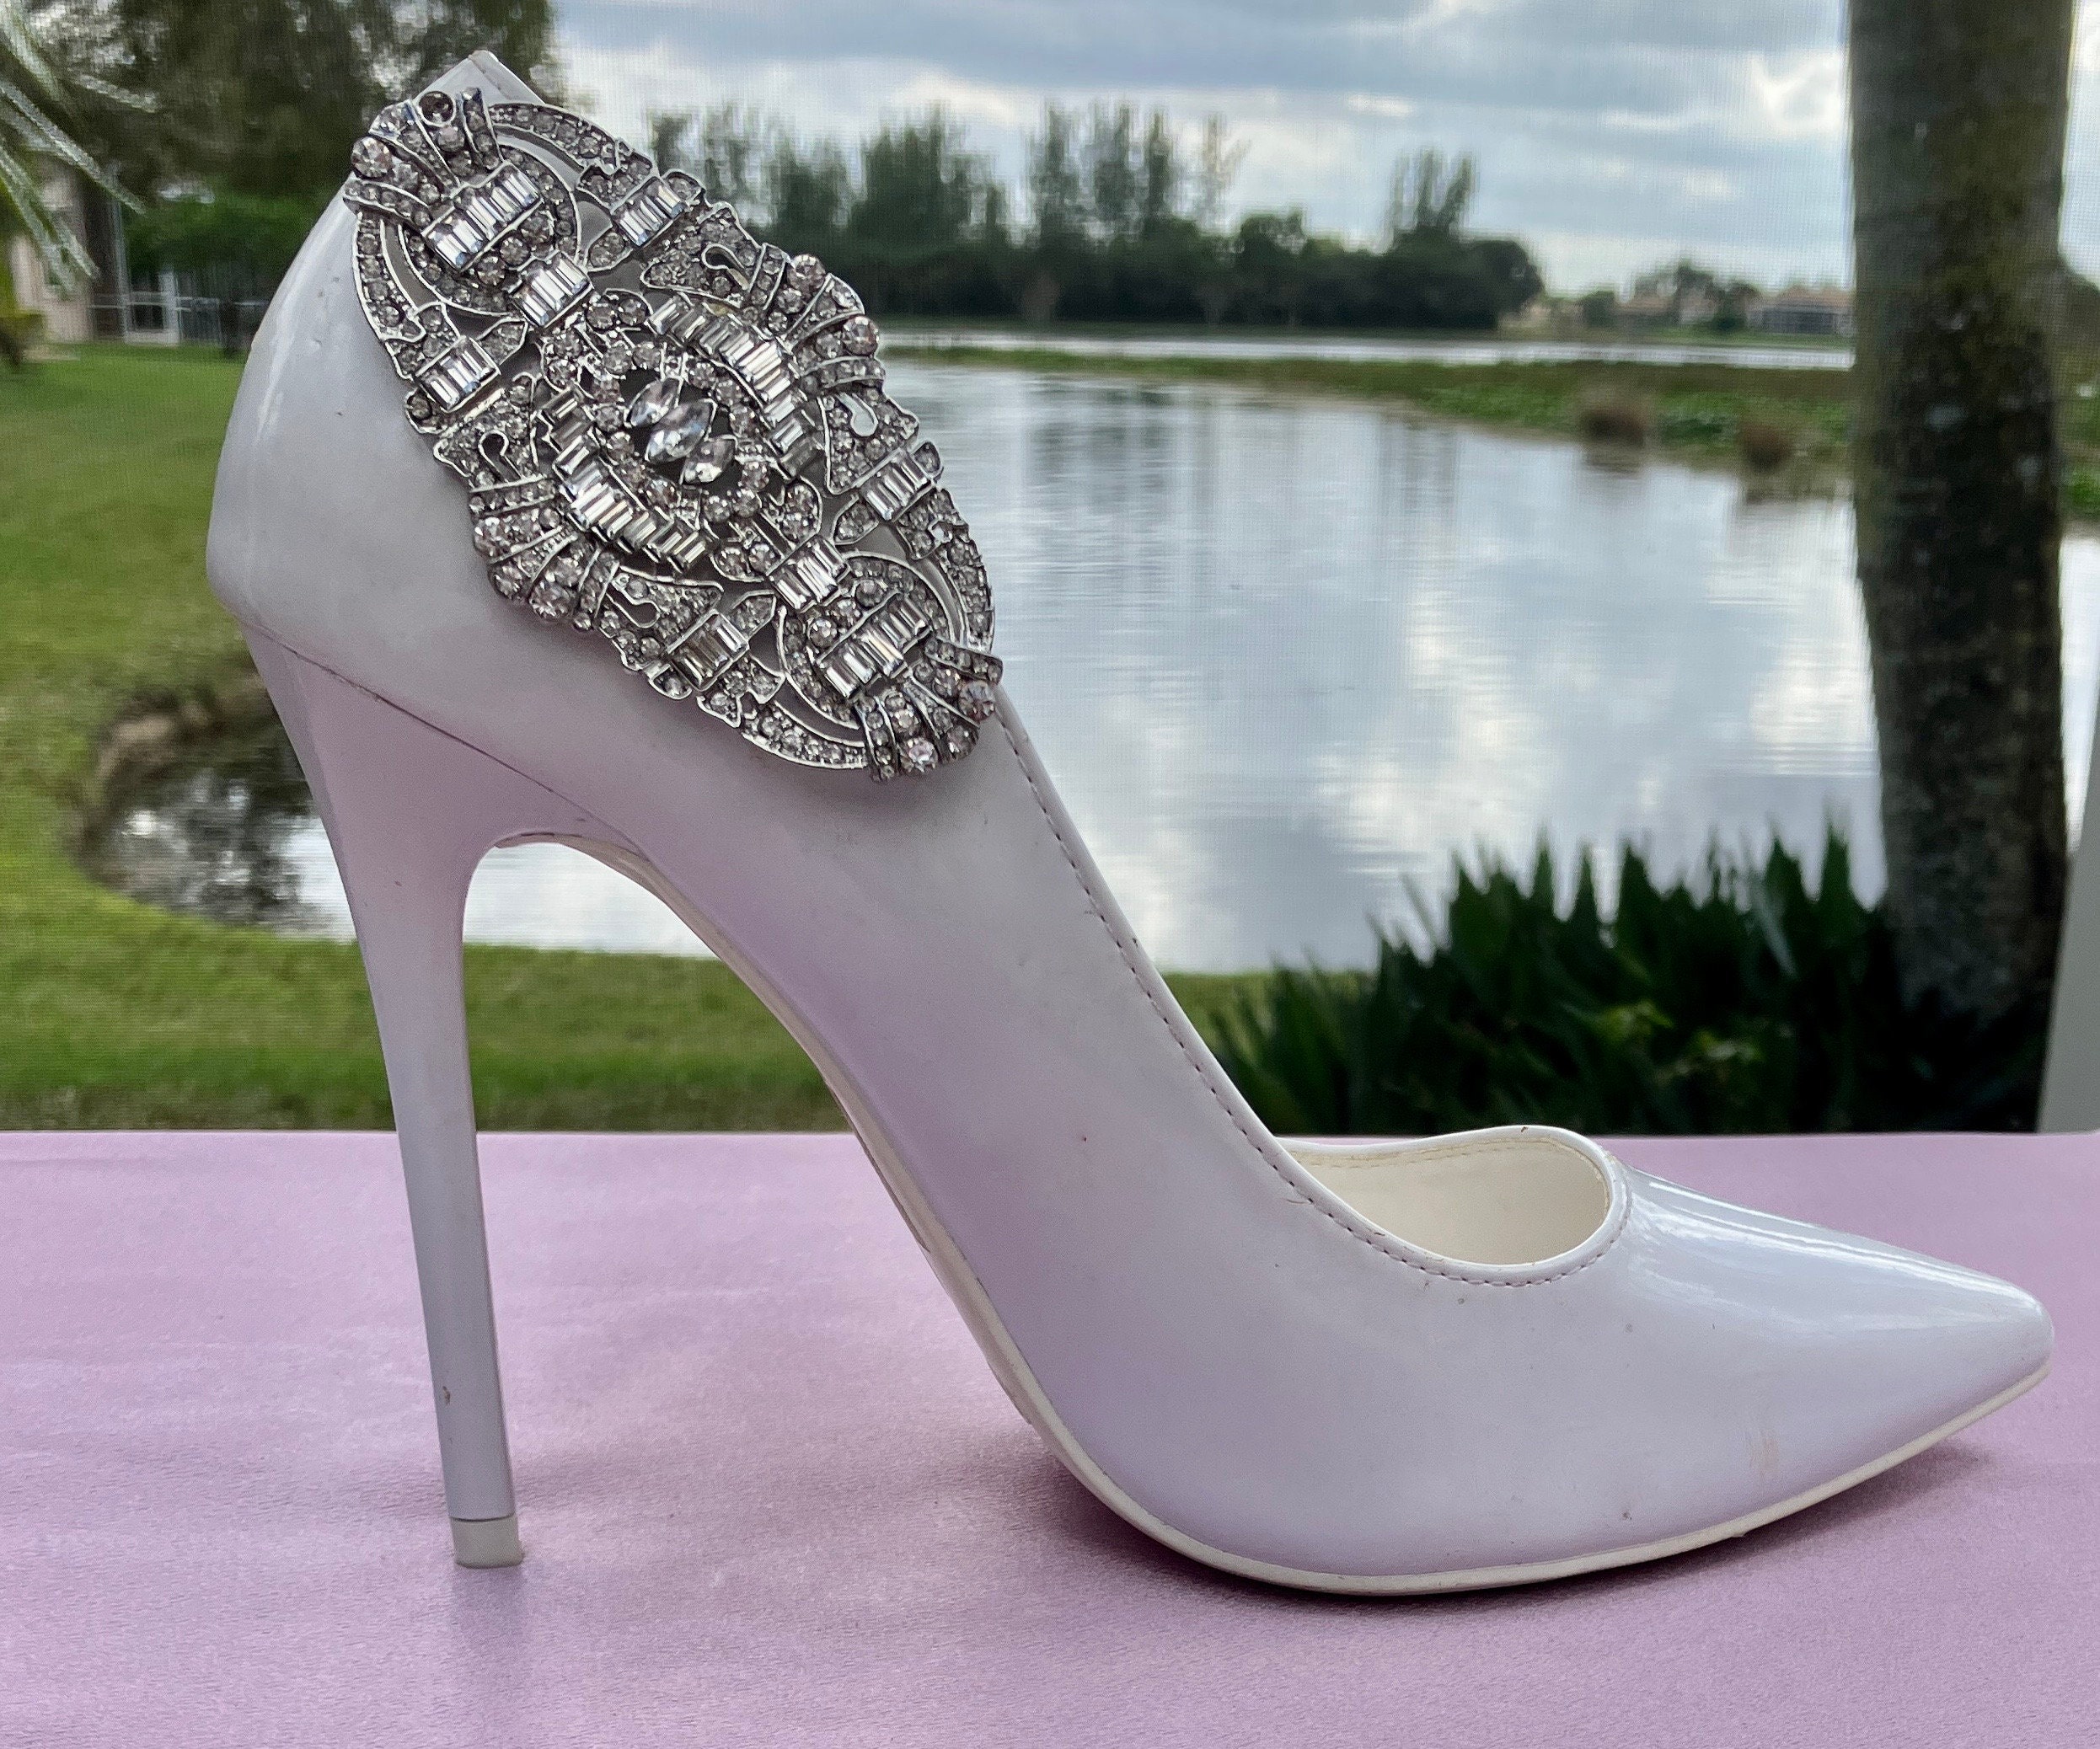 Bridal Rhinestone Shoe Accessory, Wedding Shoe Clips 